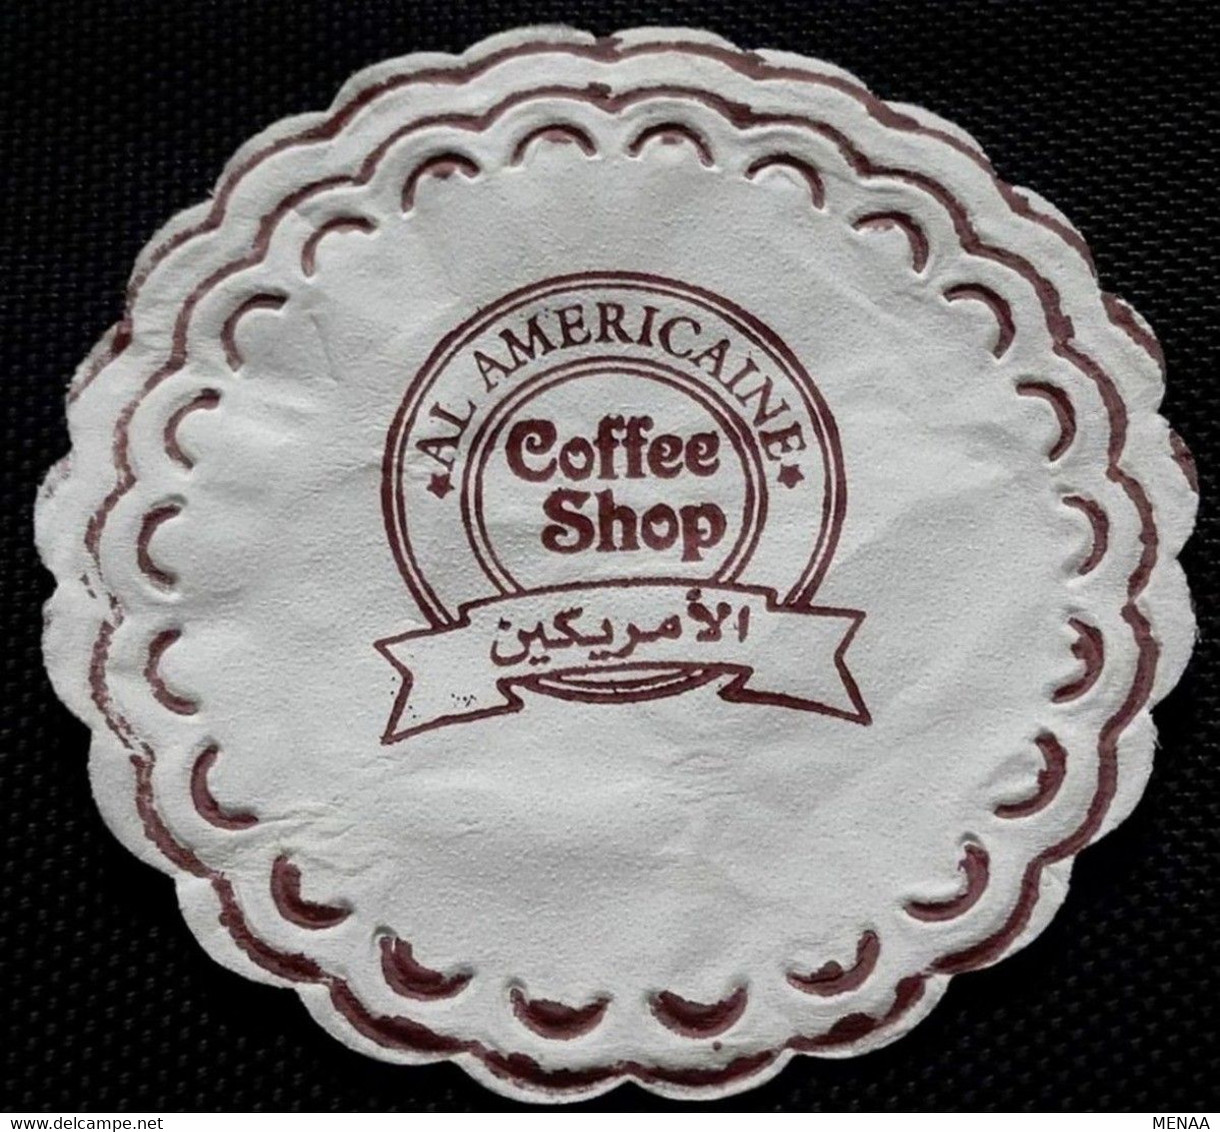 EGYPT - AL AMERICAINE COFFEE SHOP (Egypte) (Egitto) (Ägypten) (Egipto) (Egypten) Africa - Company Logo Napkins